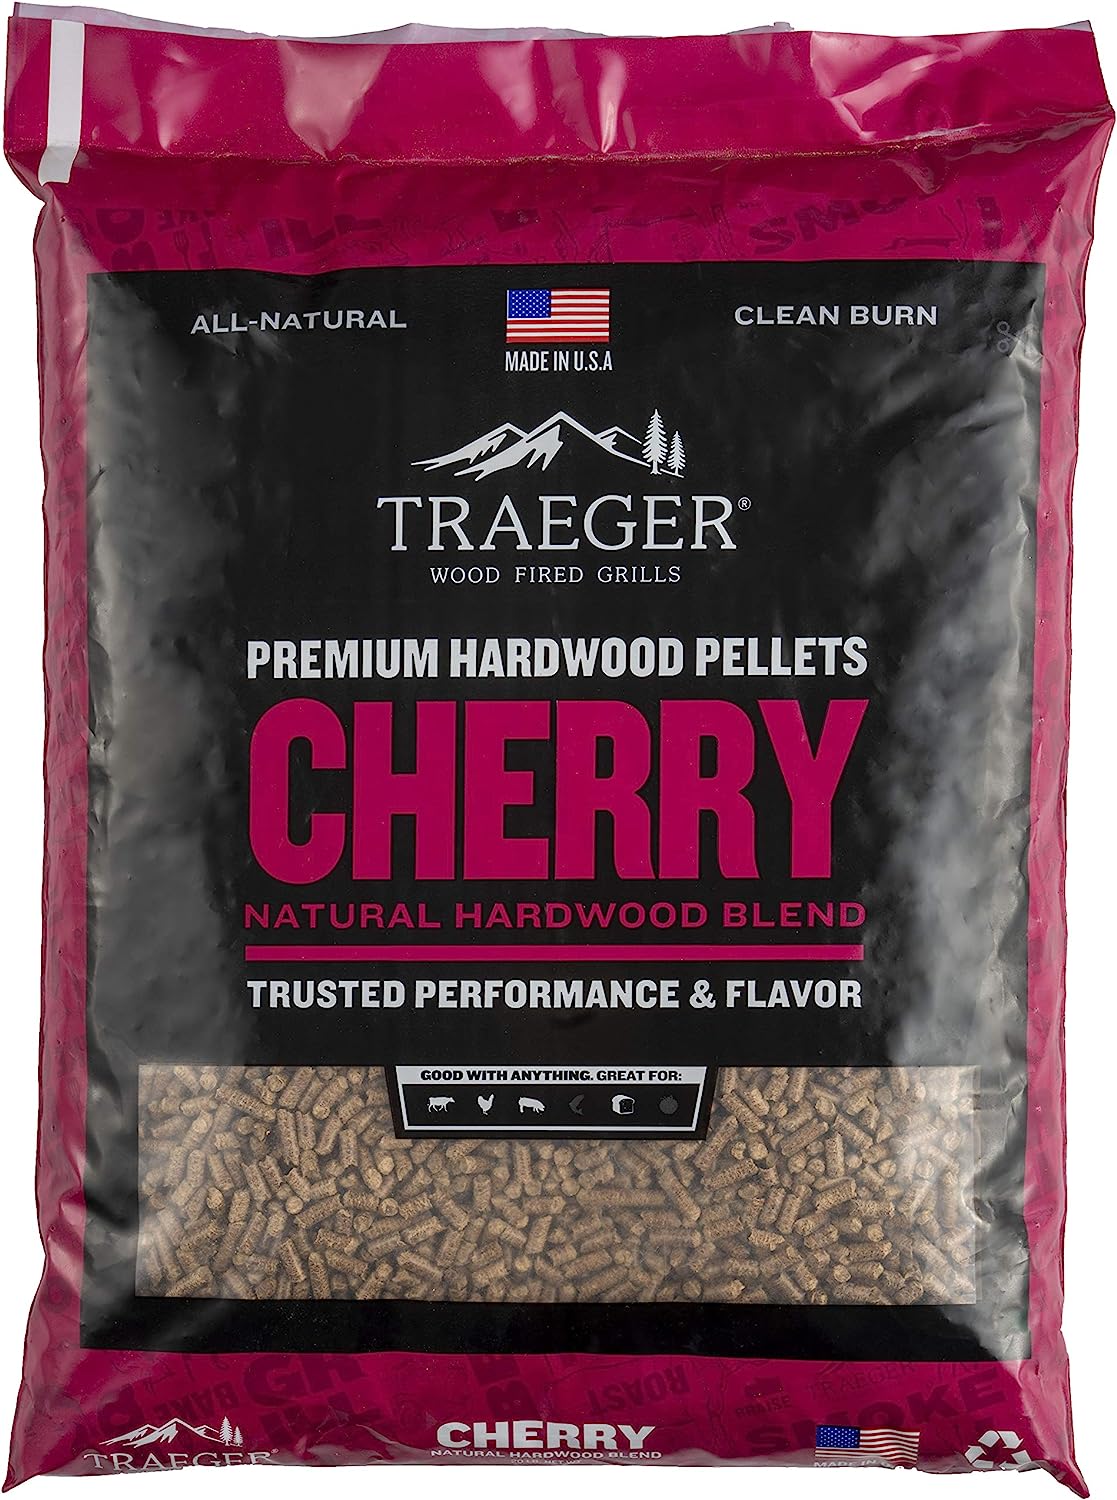 Traeger Grills Cherry 100% All-Natural Wood Pellets [...]